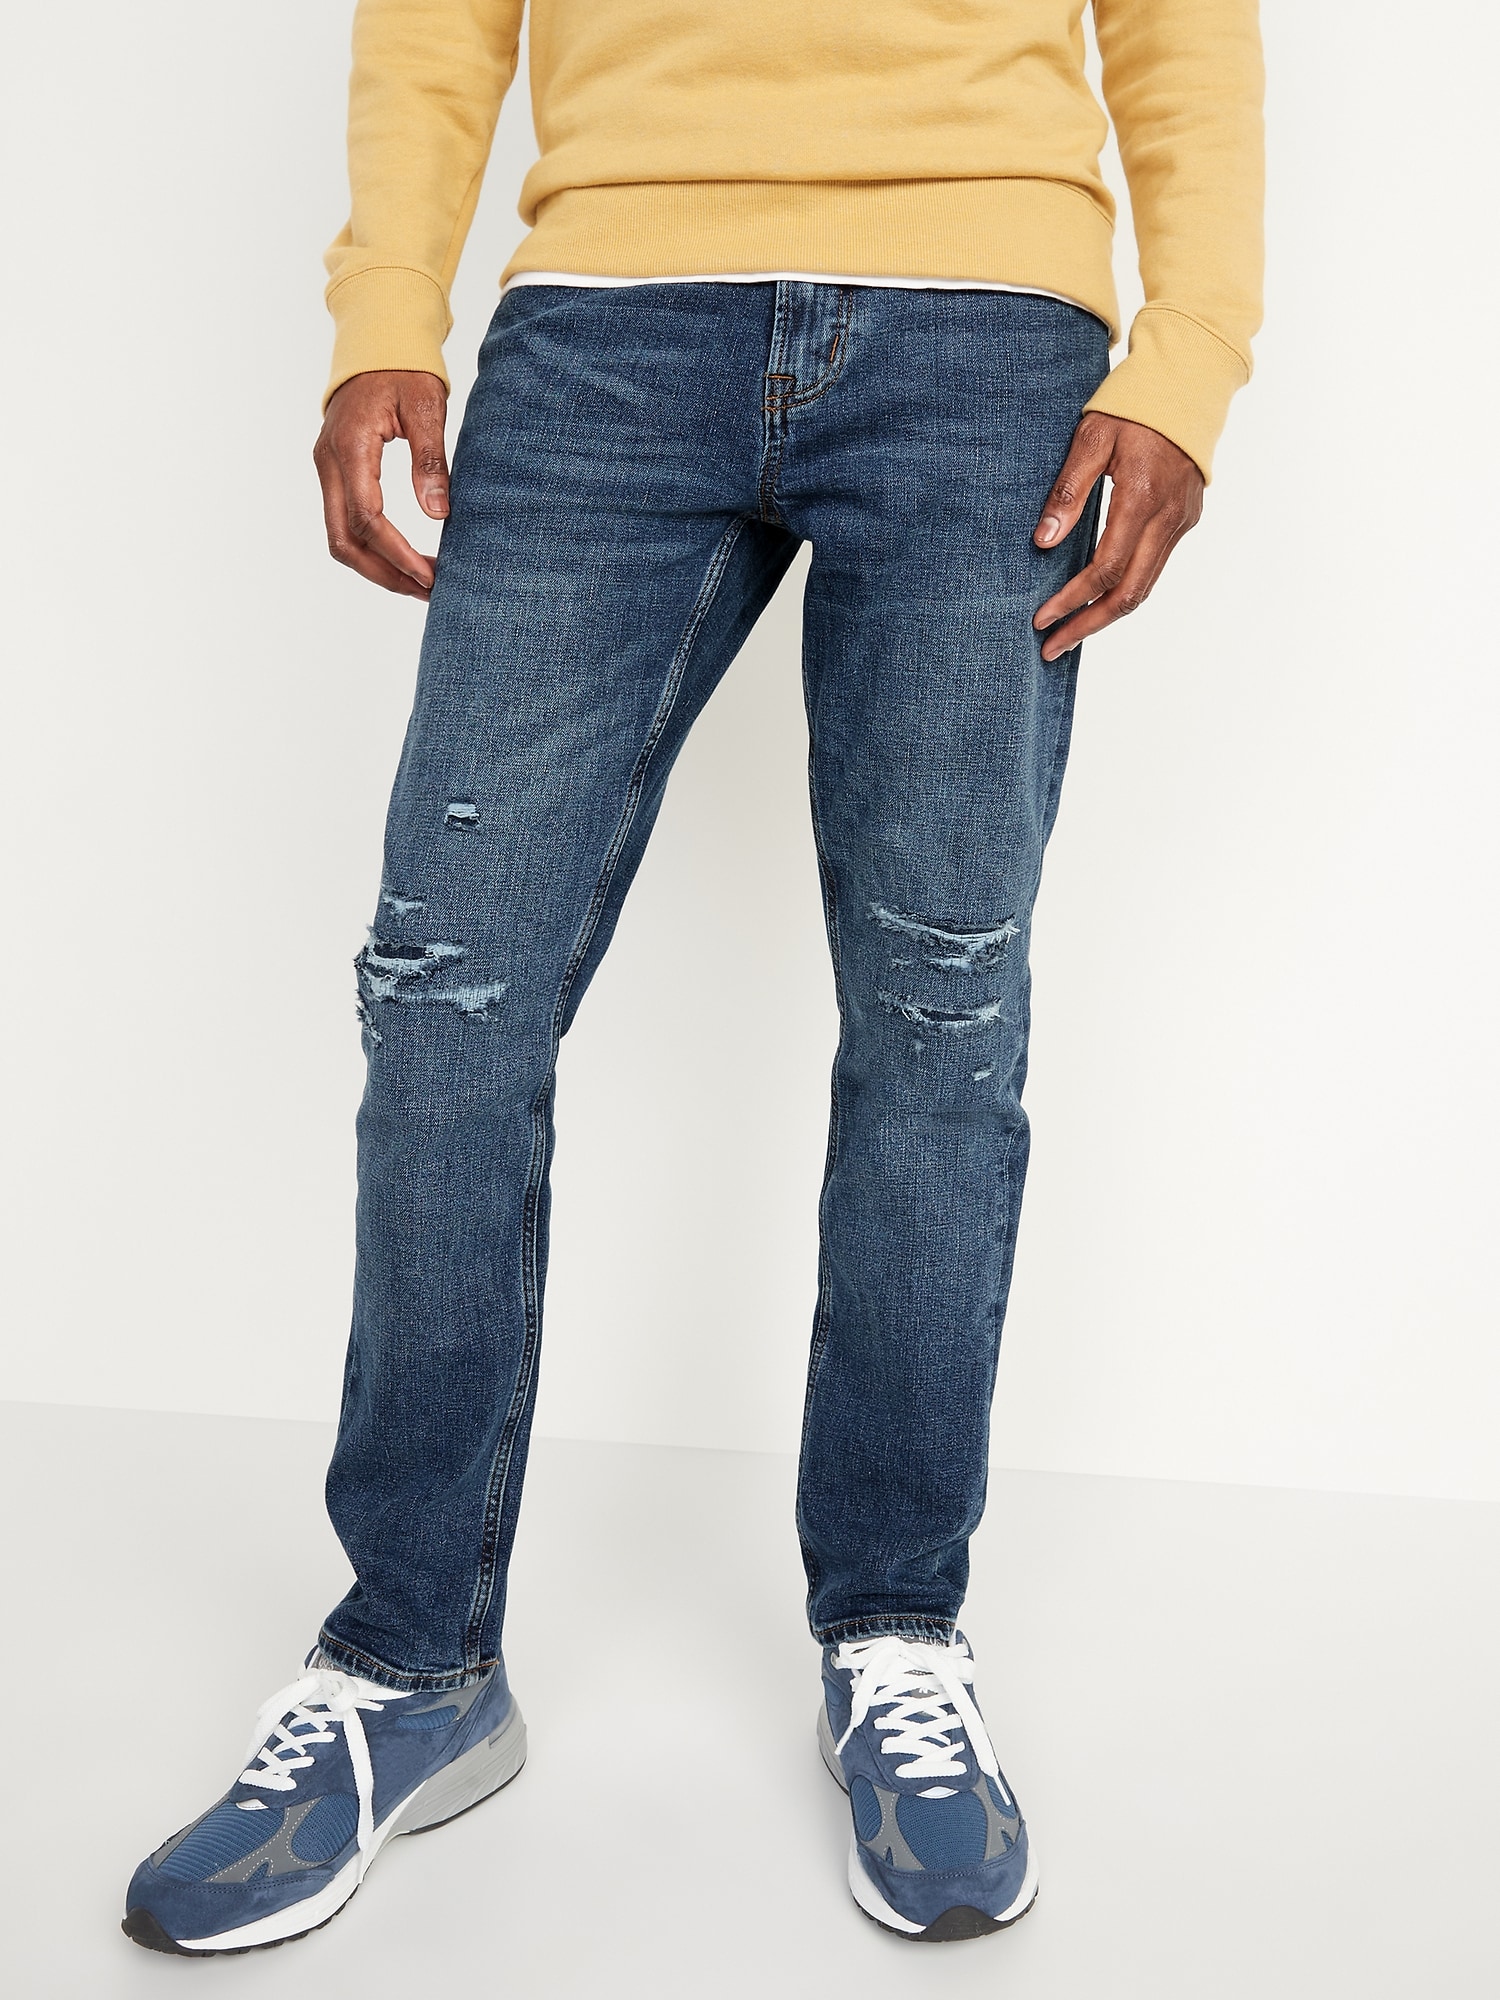 Slim Built-In Flex Ripped Jeans for Men | Old Navy